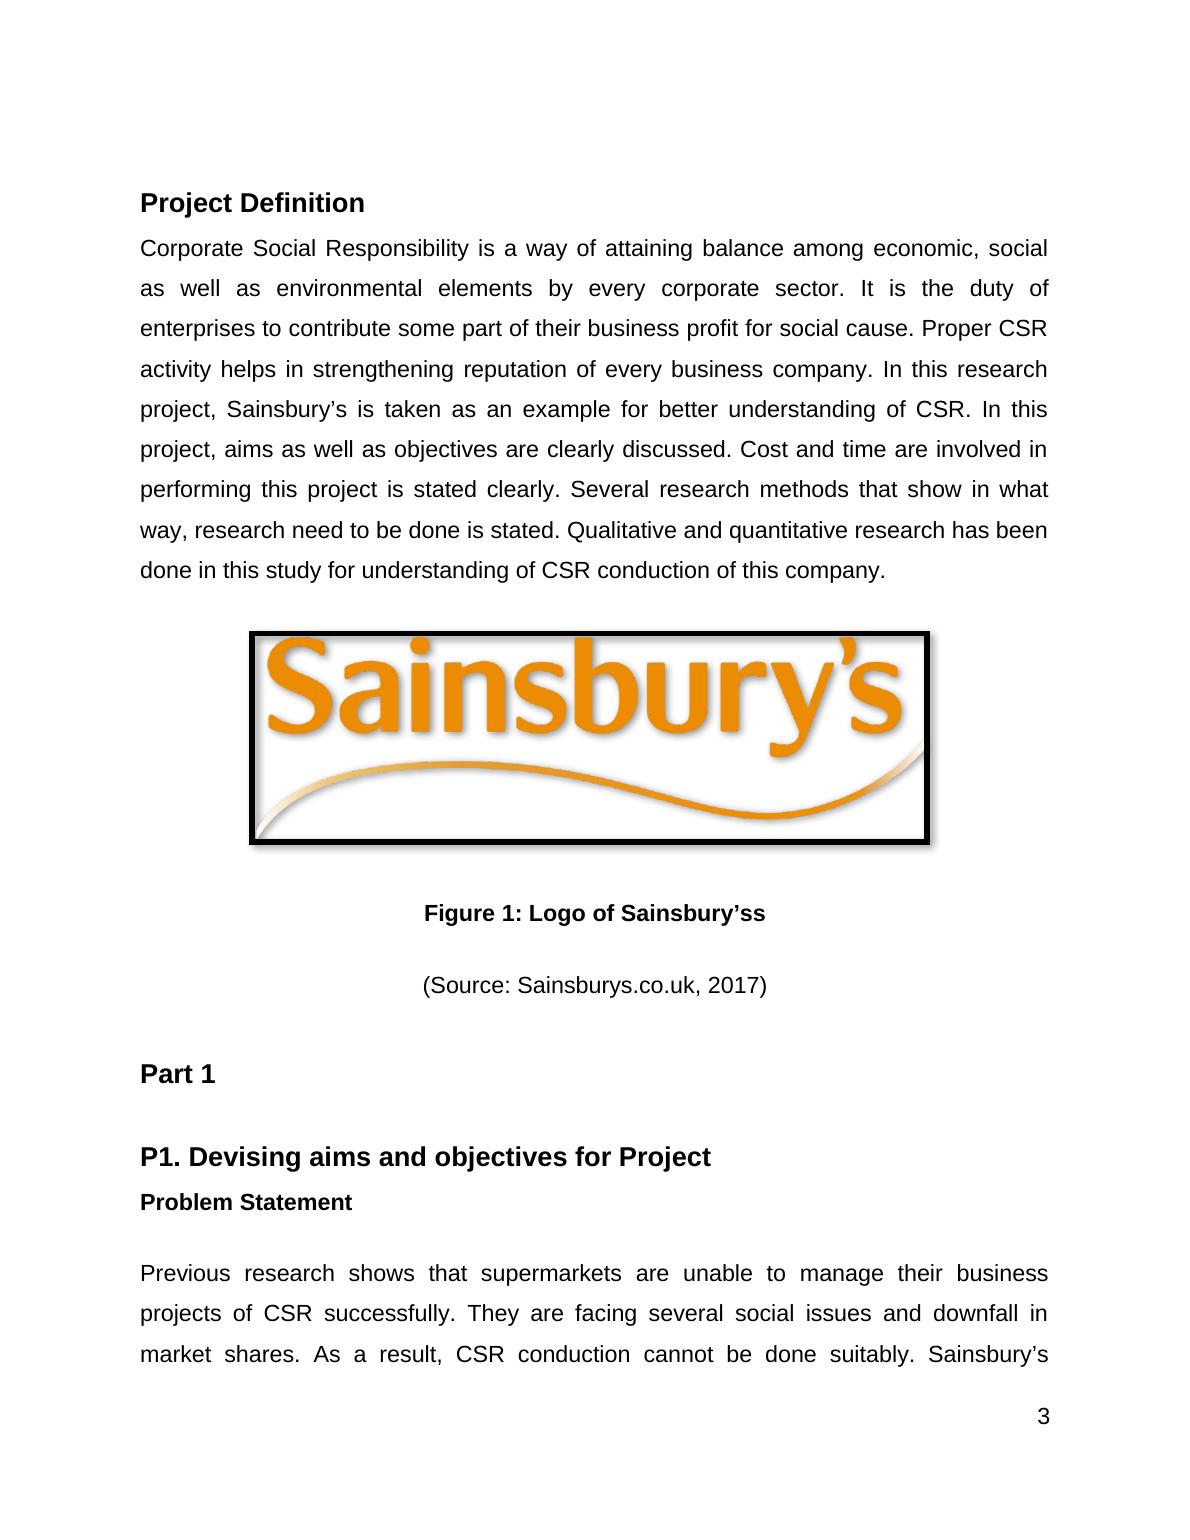 Understanding of CSR: Research Project Sainsbury_3